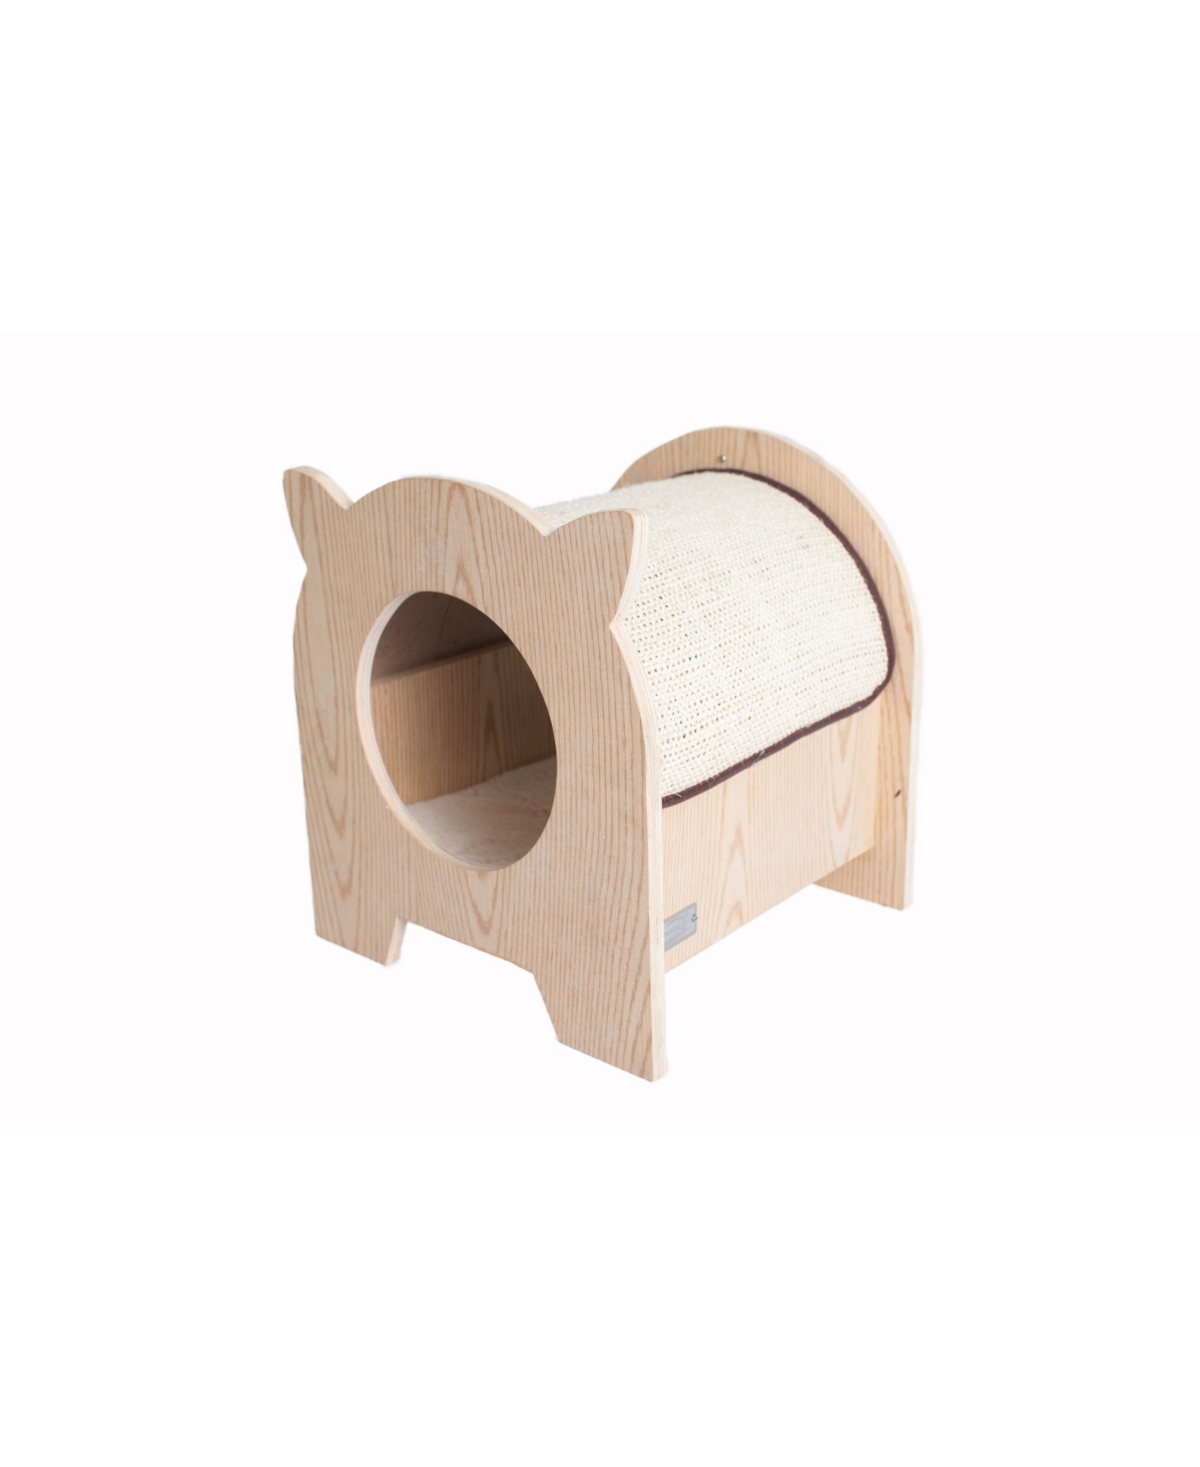 Real Wood Model Premium Wood Cat Hideaway - Beige